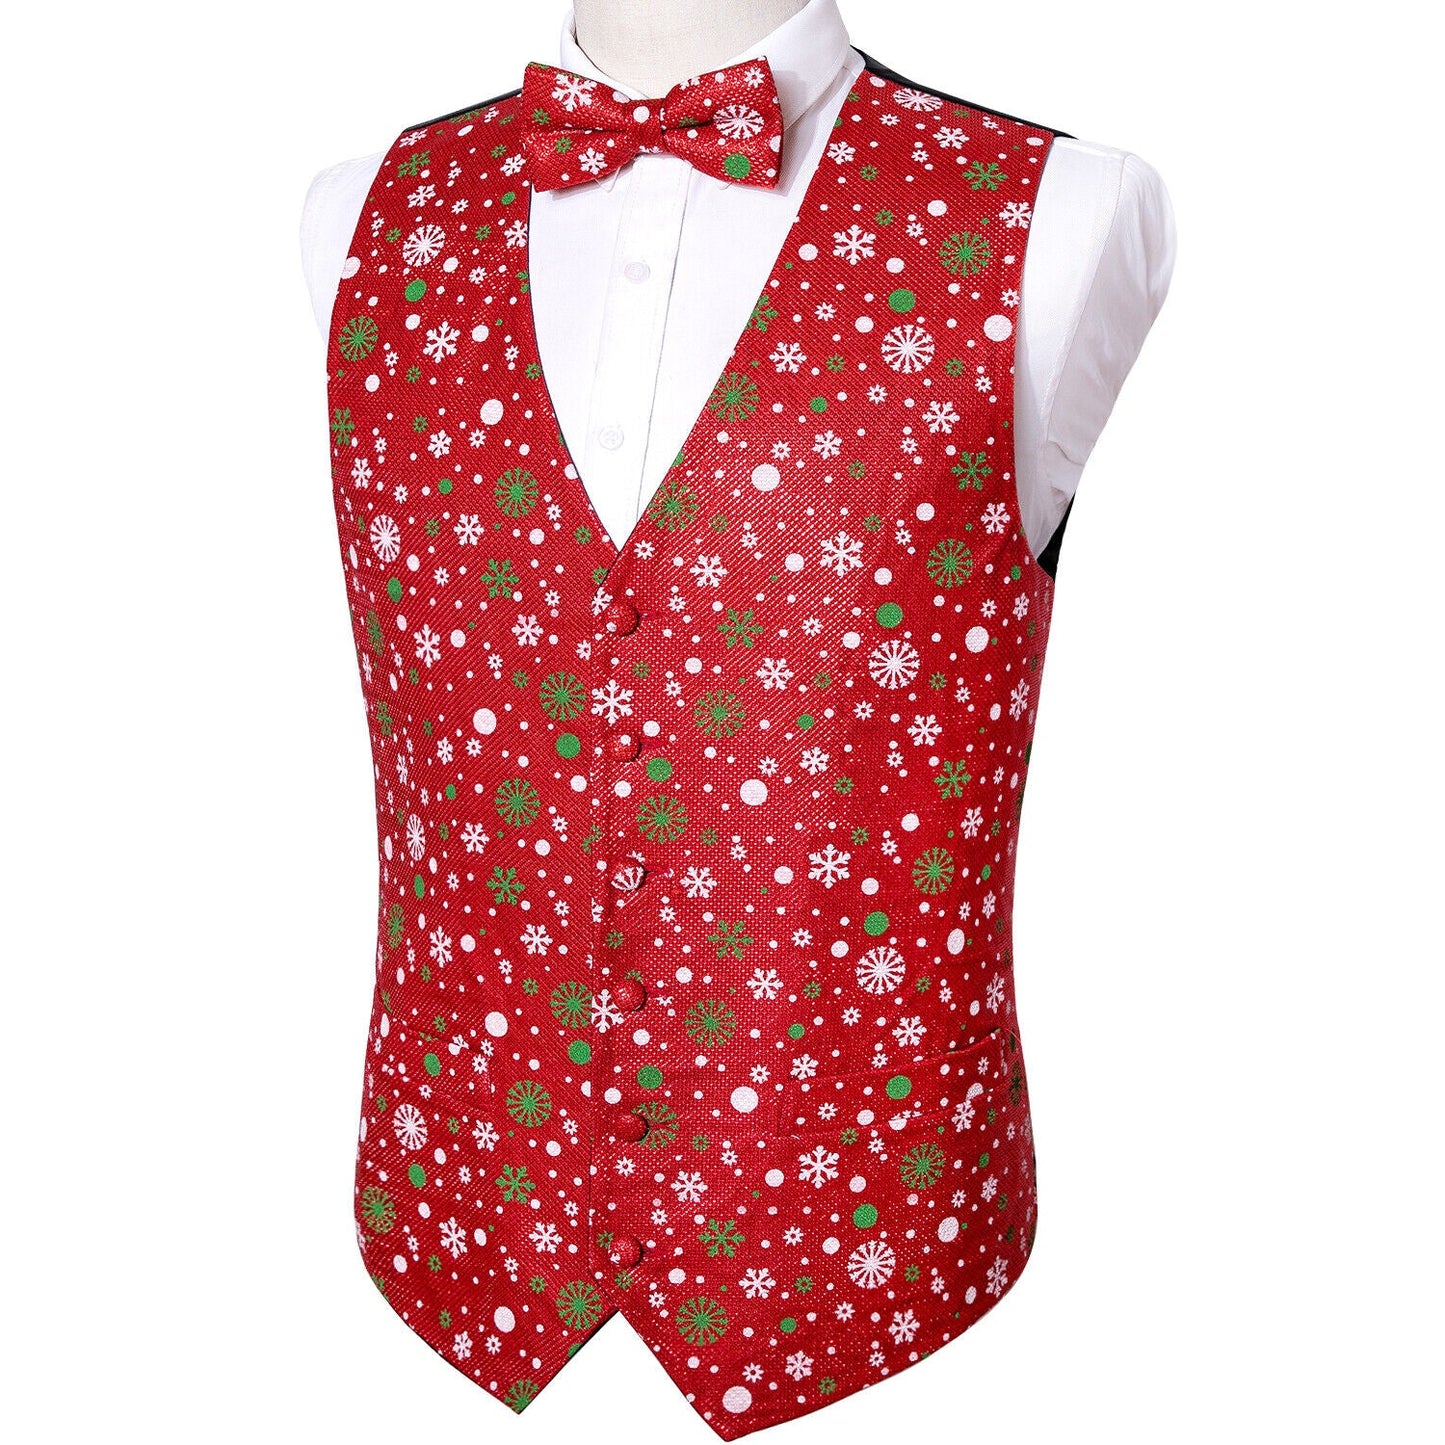 Men's Christmas Waistcoat Vest Set Bowtie Snowflakes Red